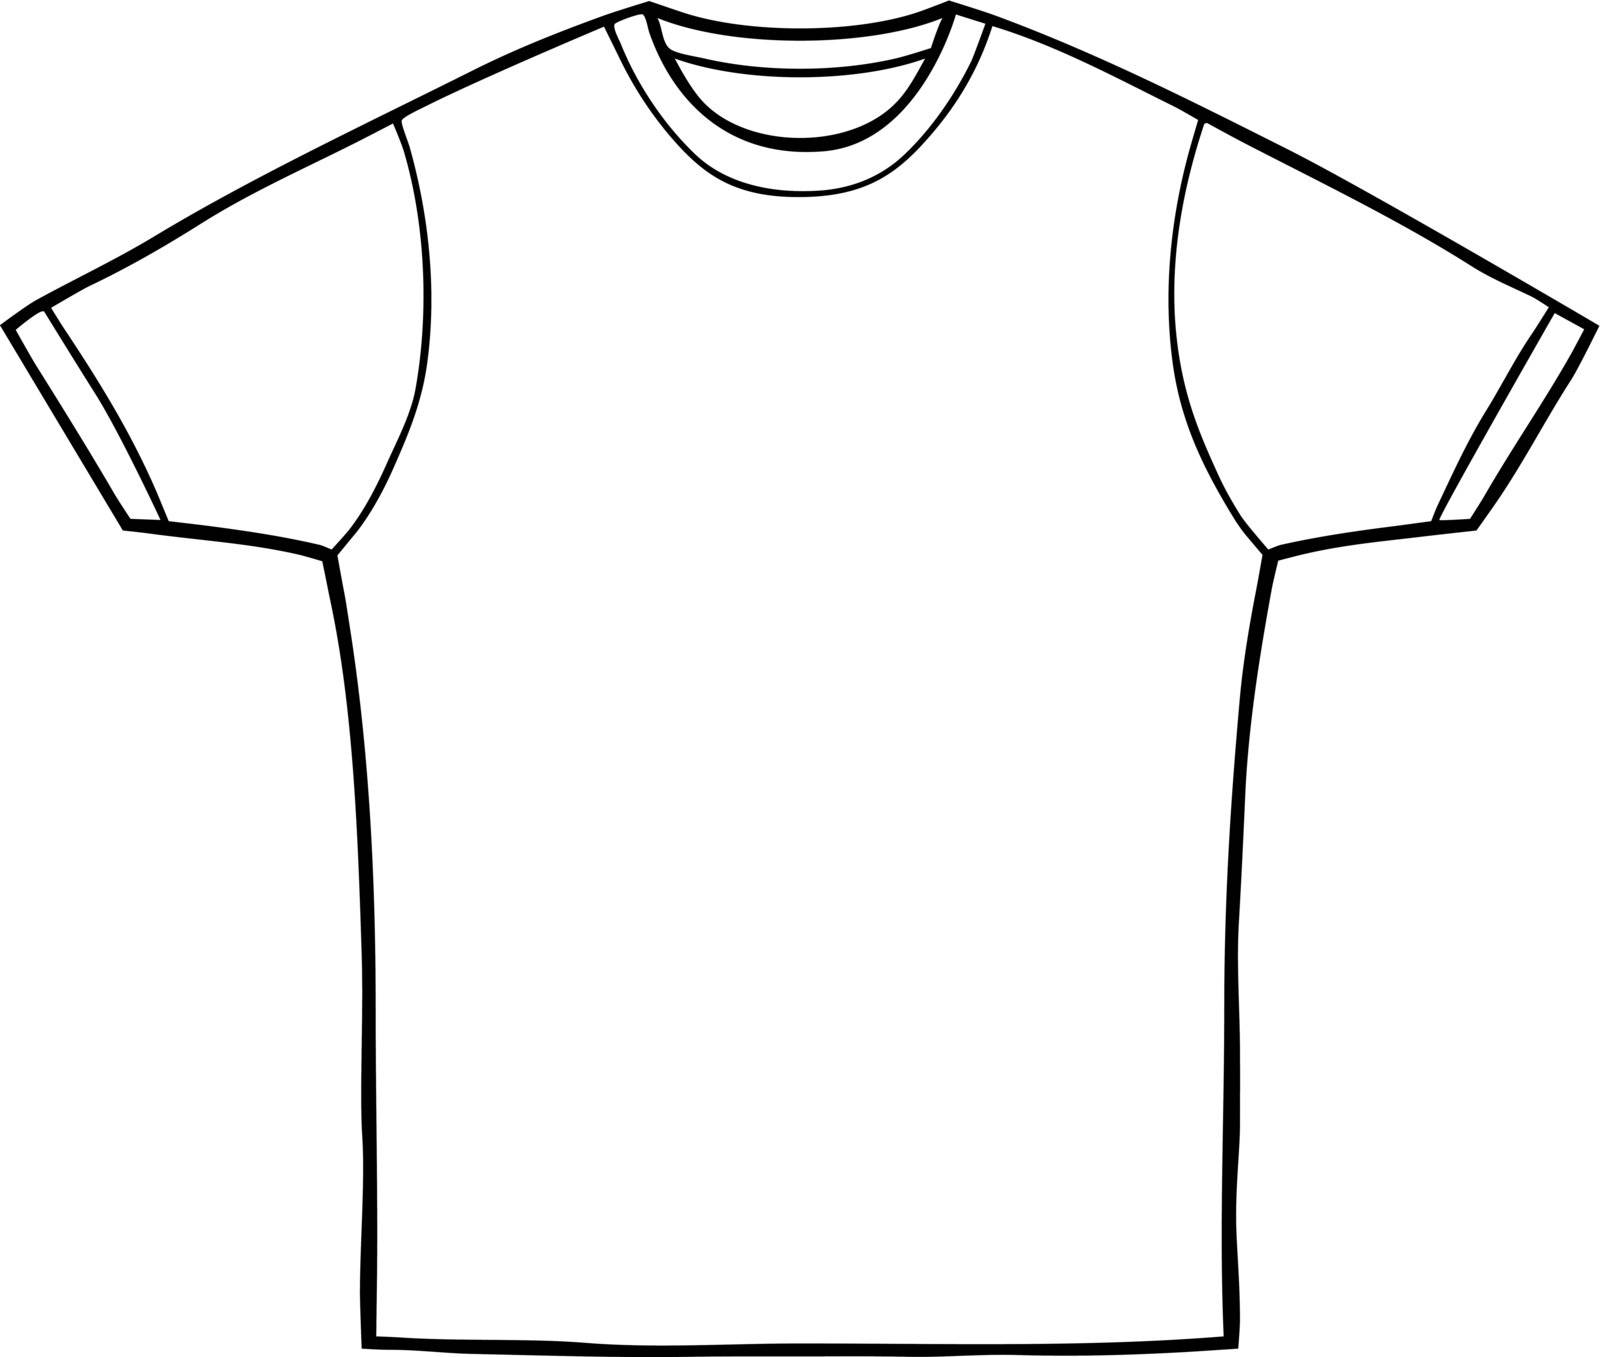 Clothing line art - t-shirt - black and white.